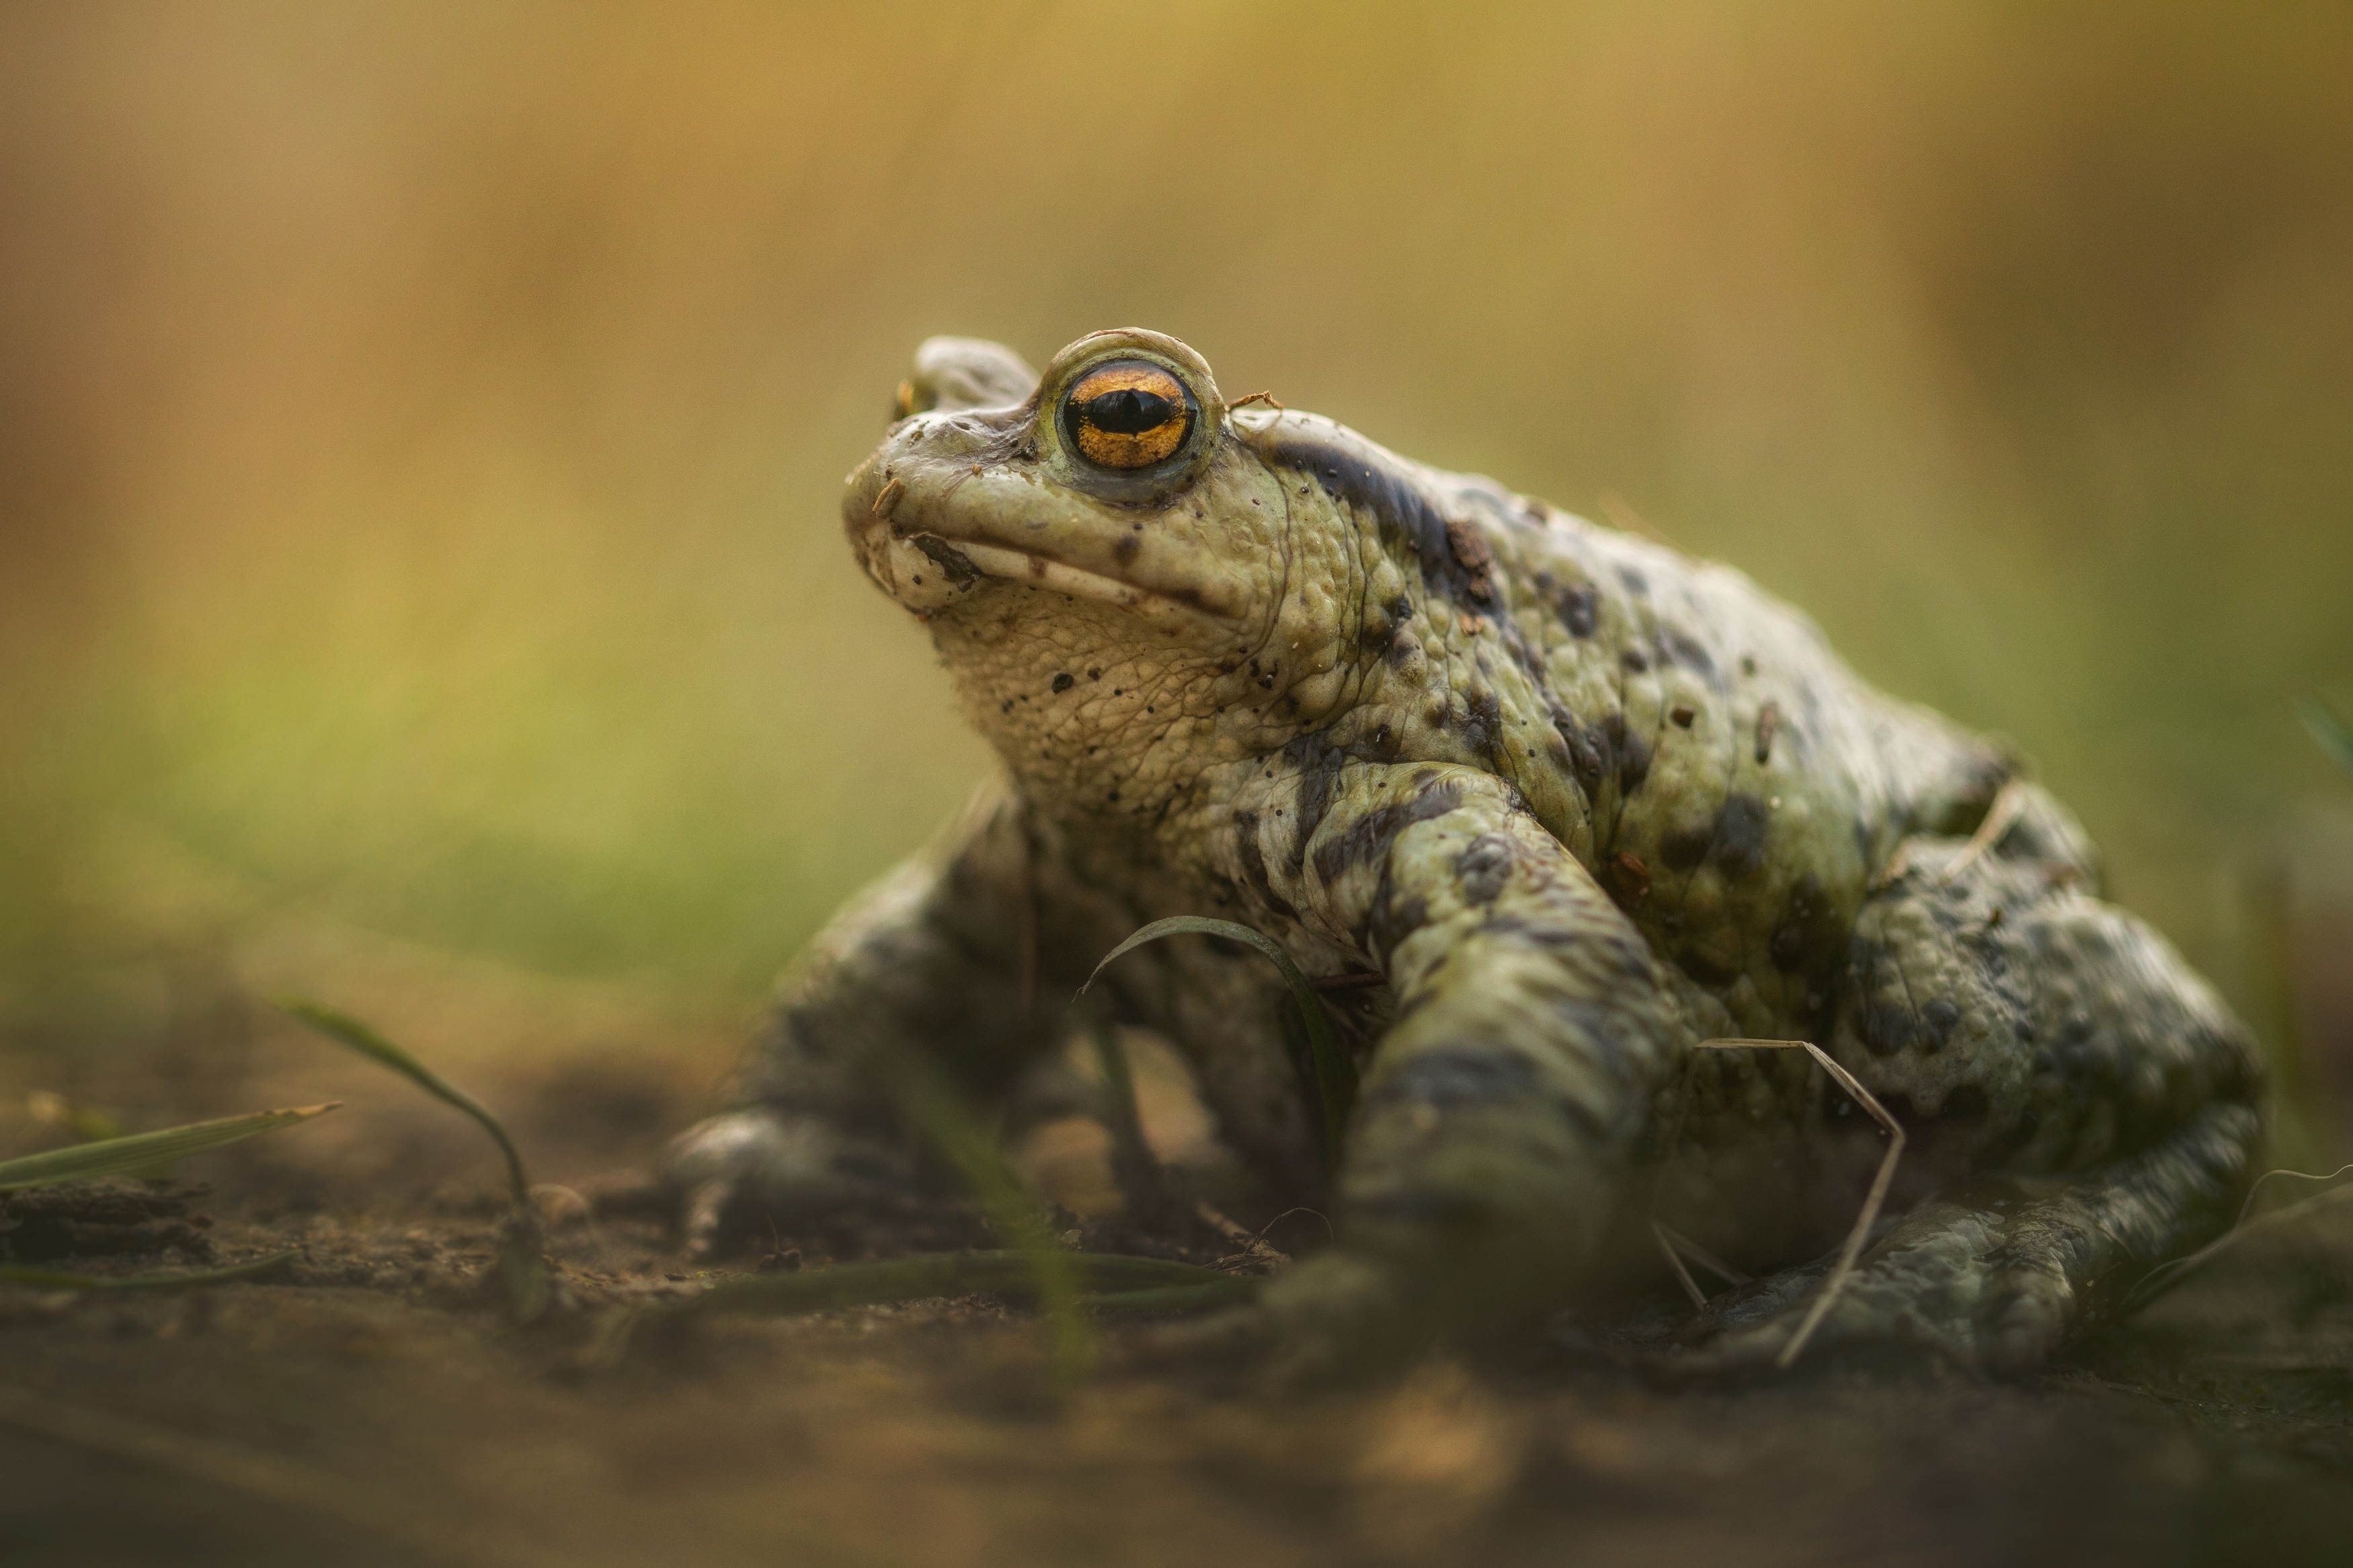 Photography, Toad, Close-up, Amphibian, Nature, Frog, Animal, Day, Wildlife, Damian Cyfka